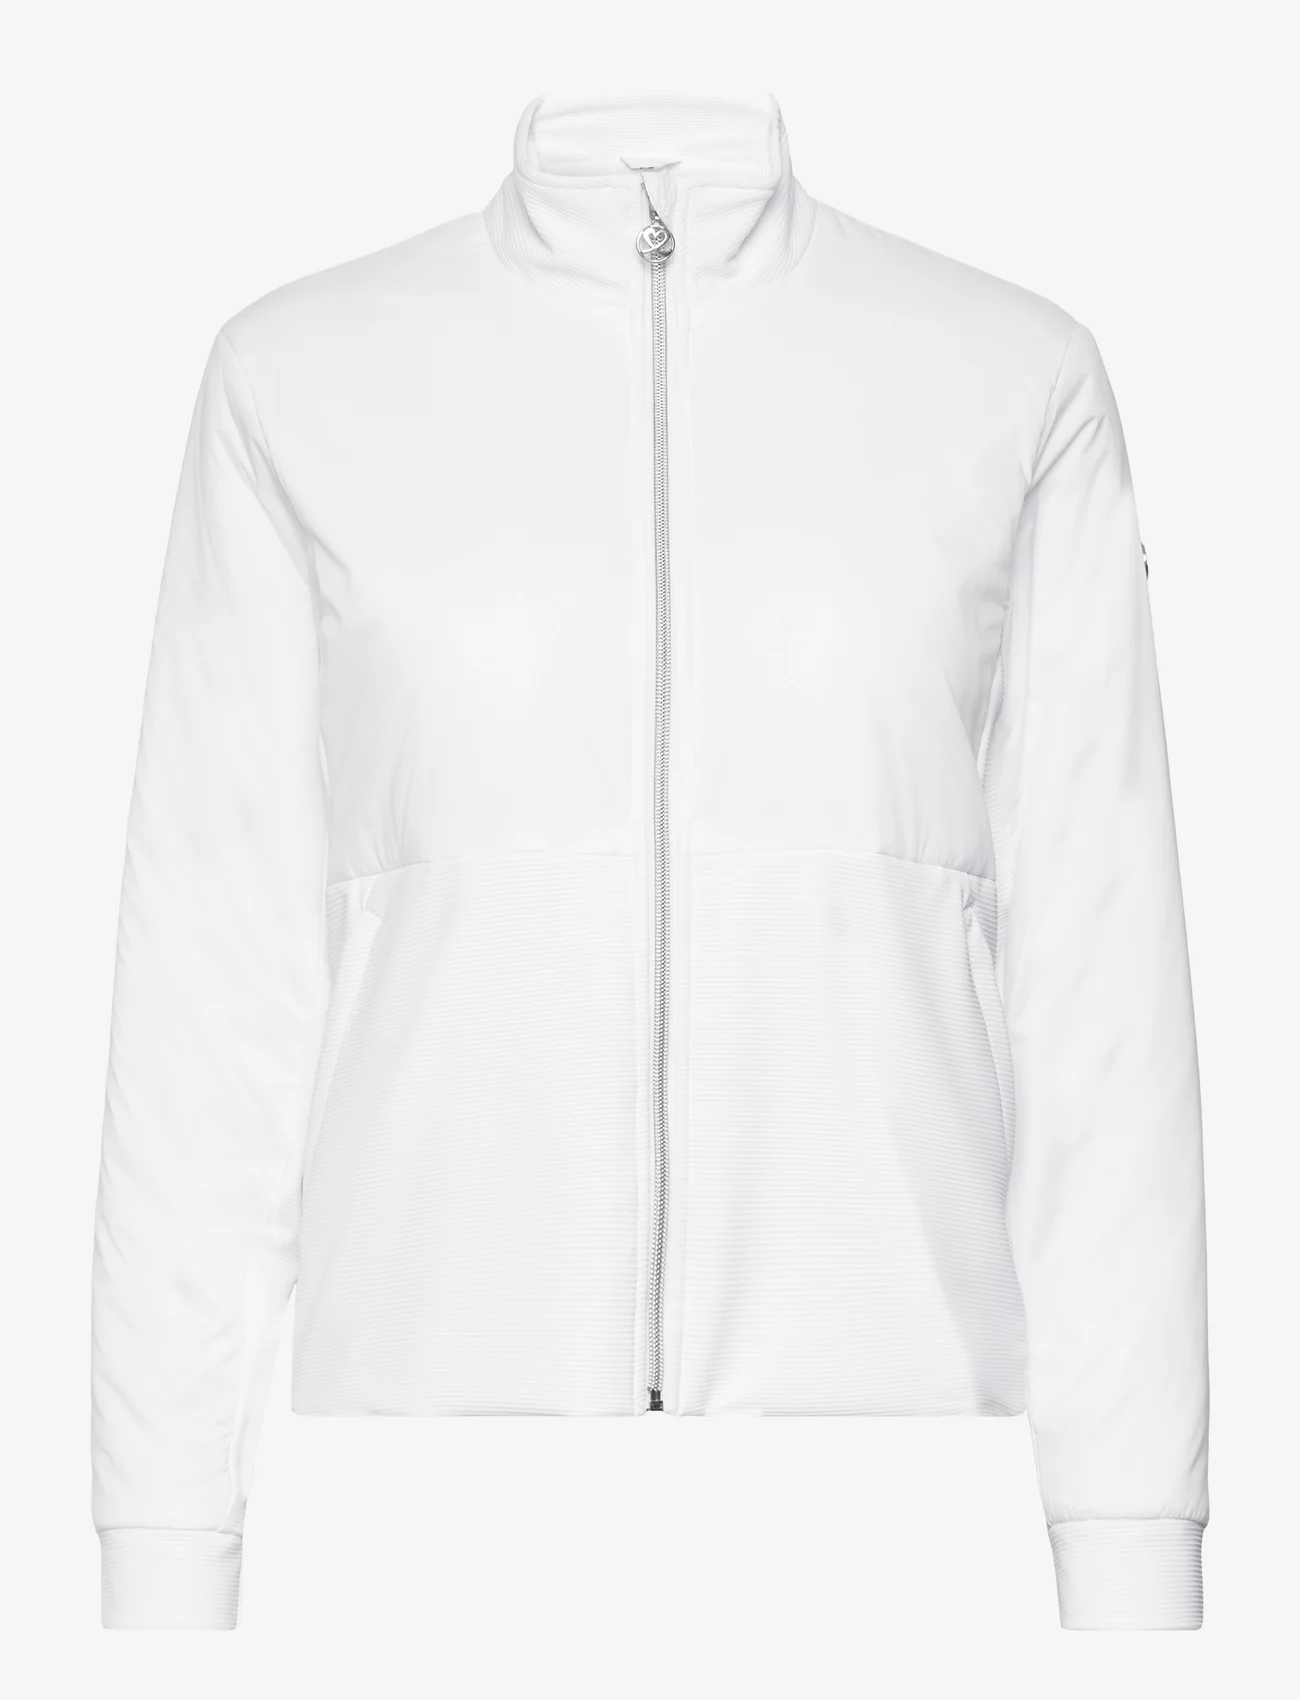 Daily Sports - DEBBIE JACKET - golf jackets - white - 0